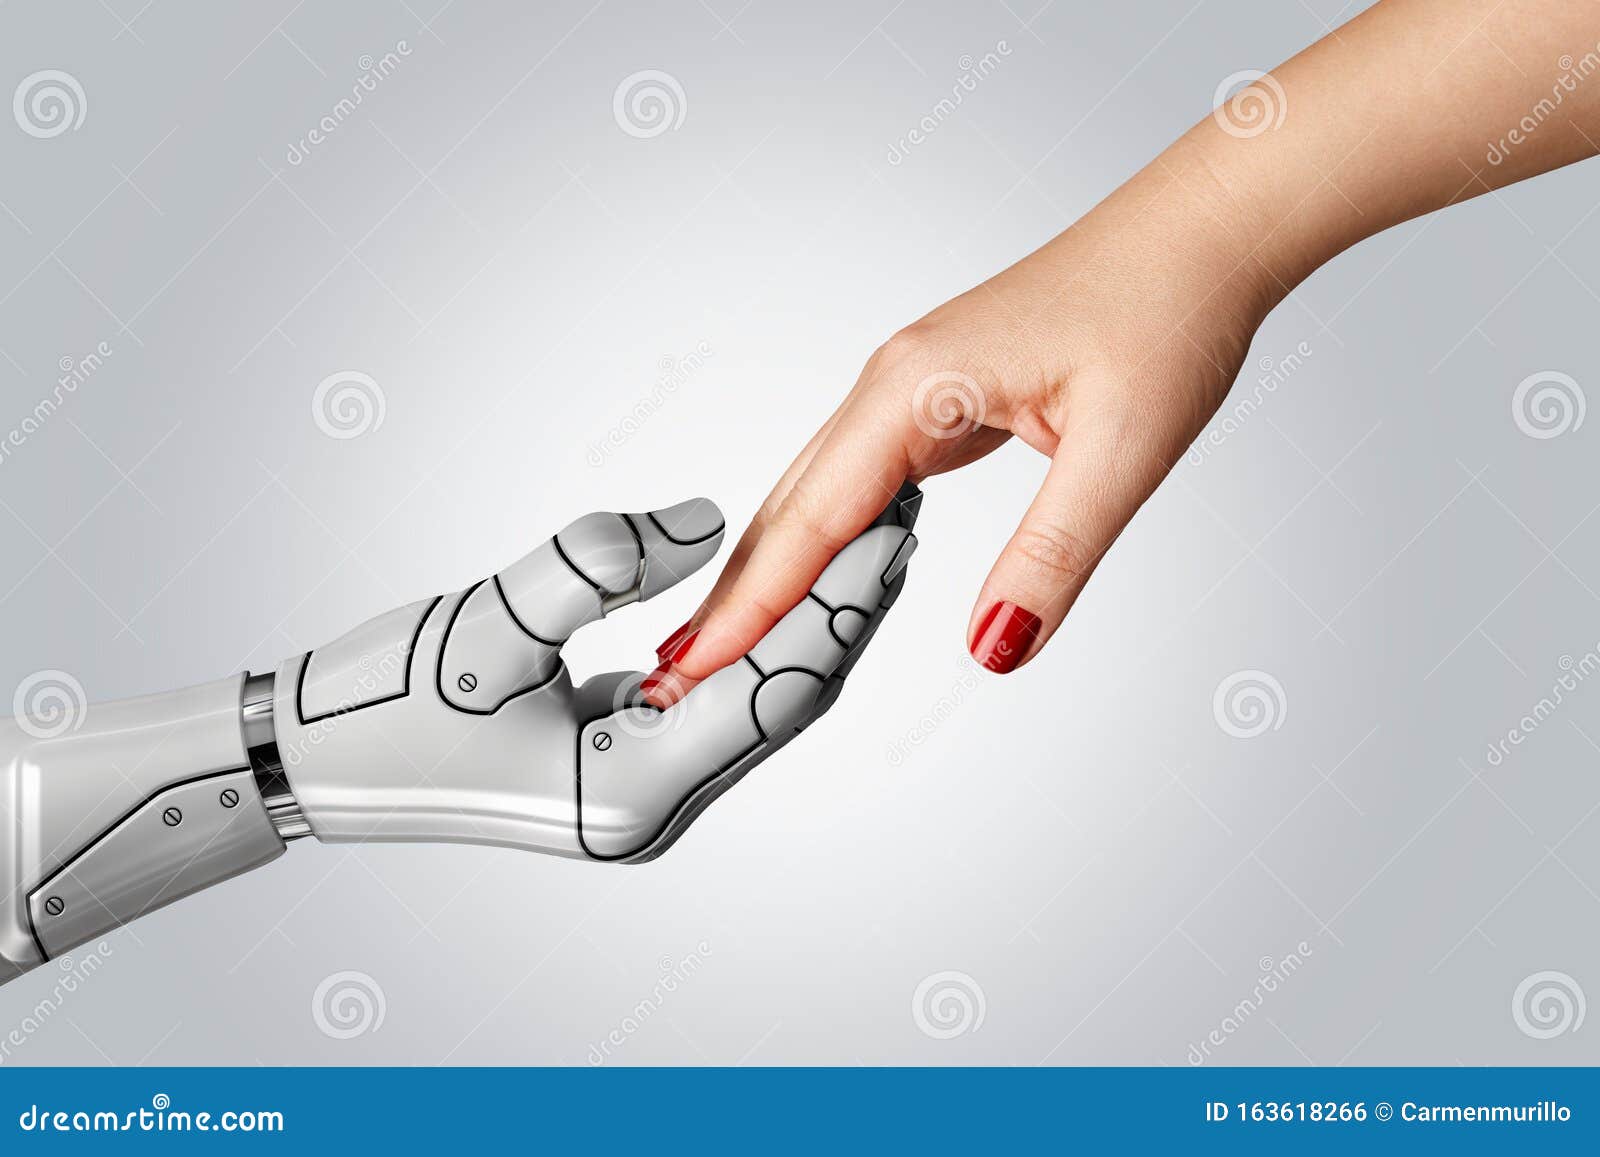 robotic cyborg hand holding female human hand